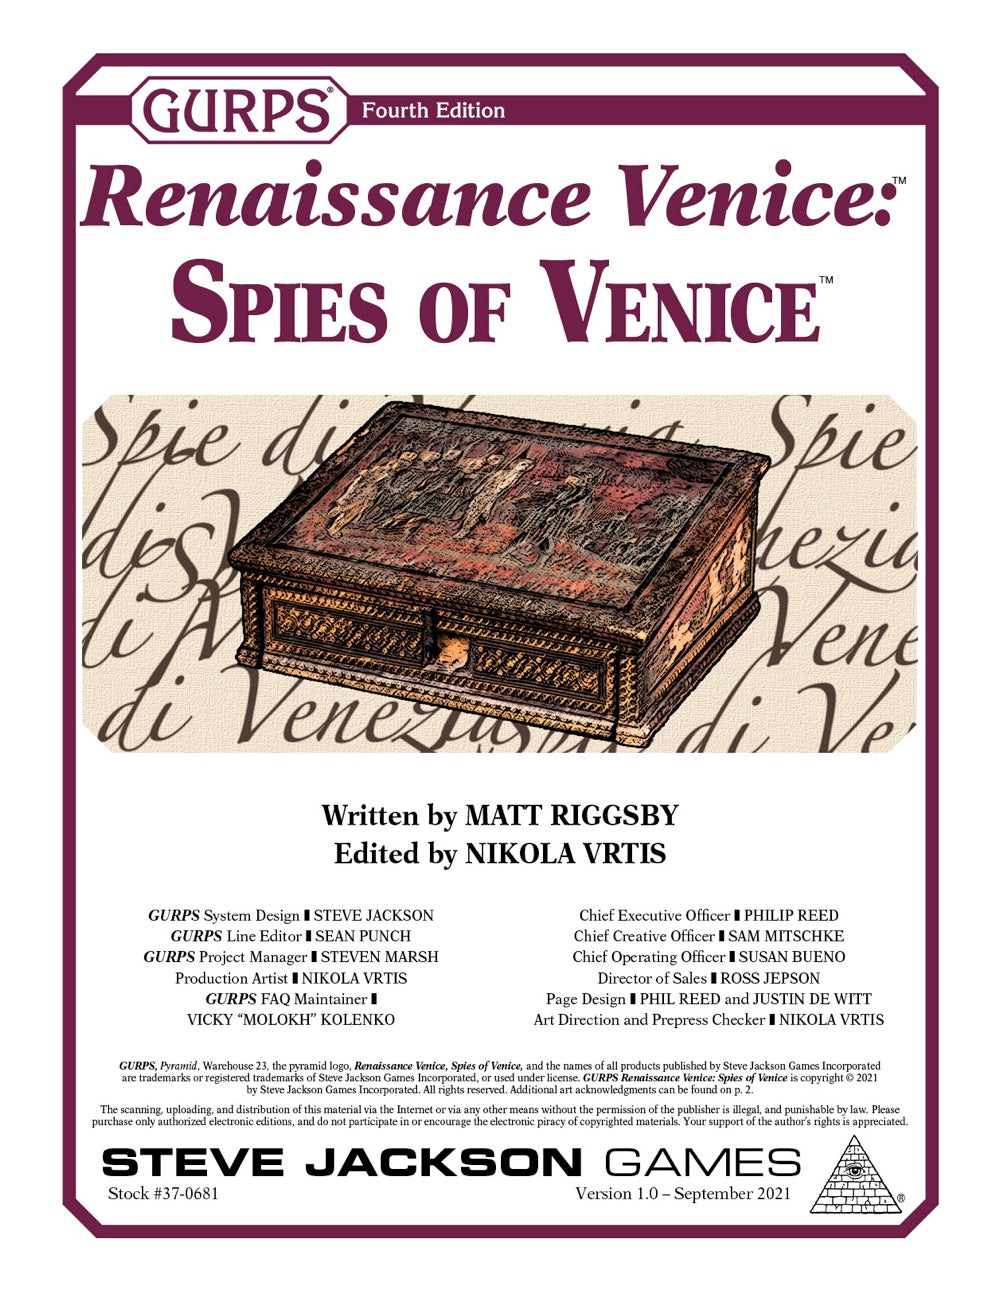 GURPS Renaissance Venice: Spies of Venice